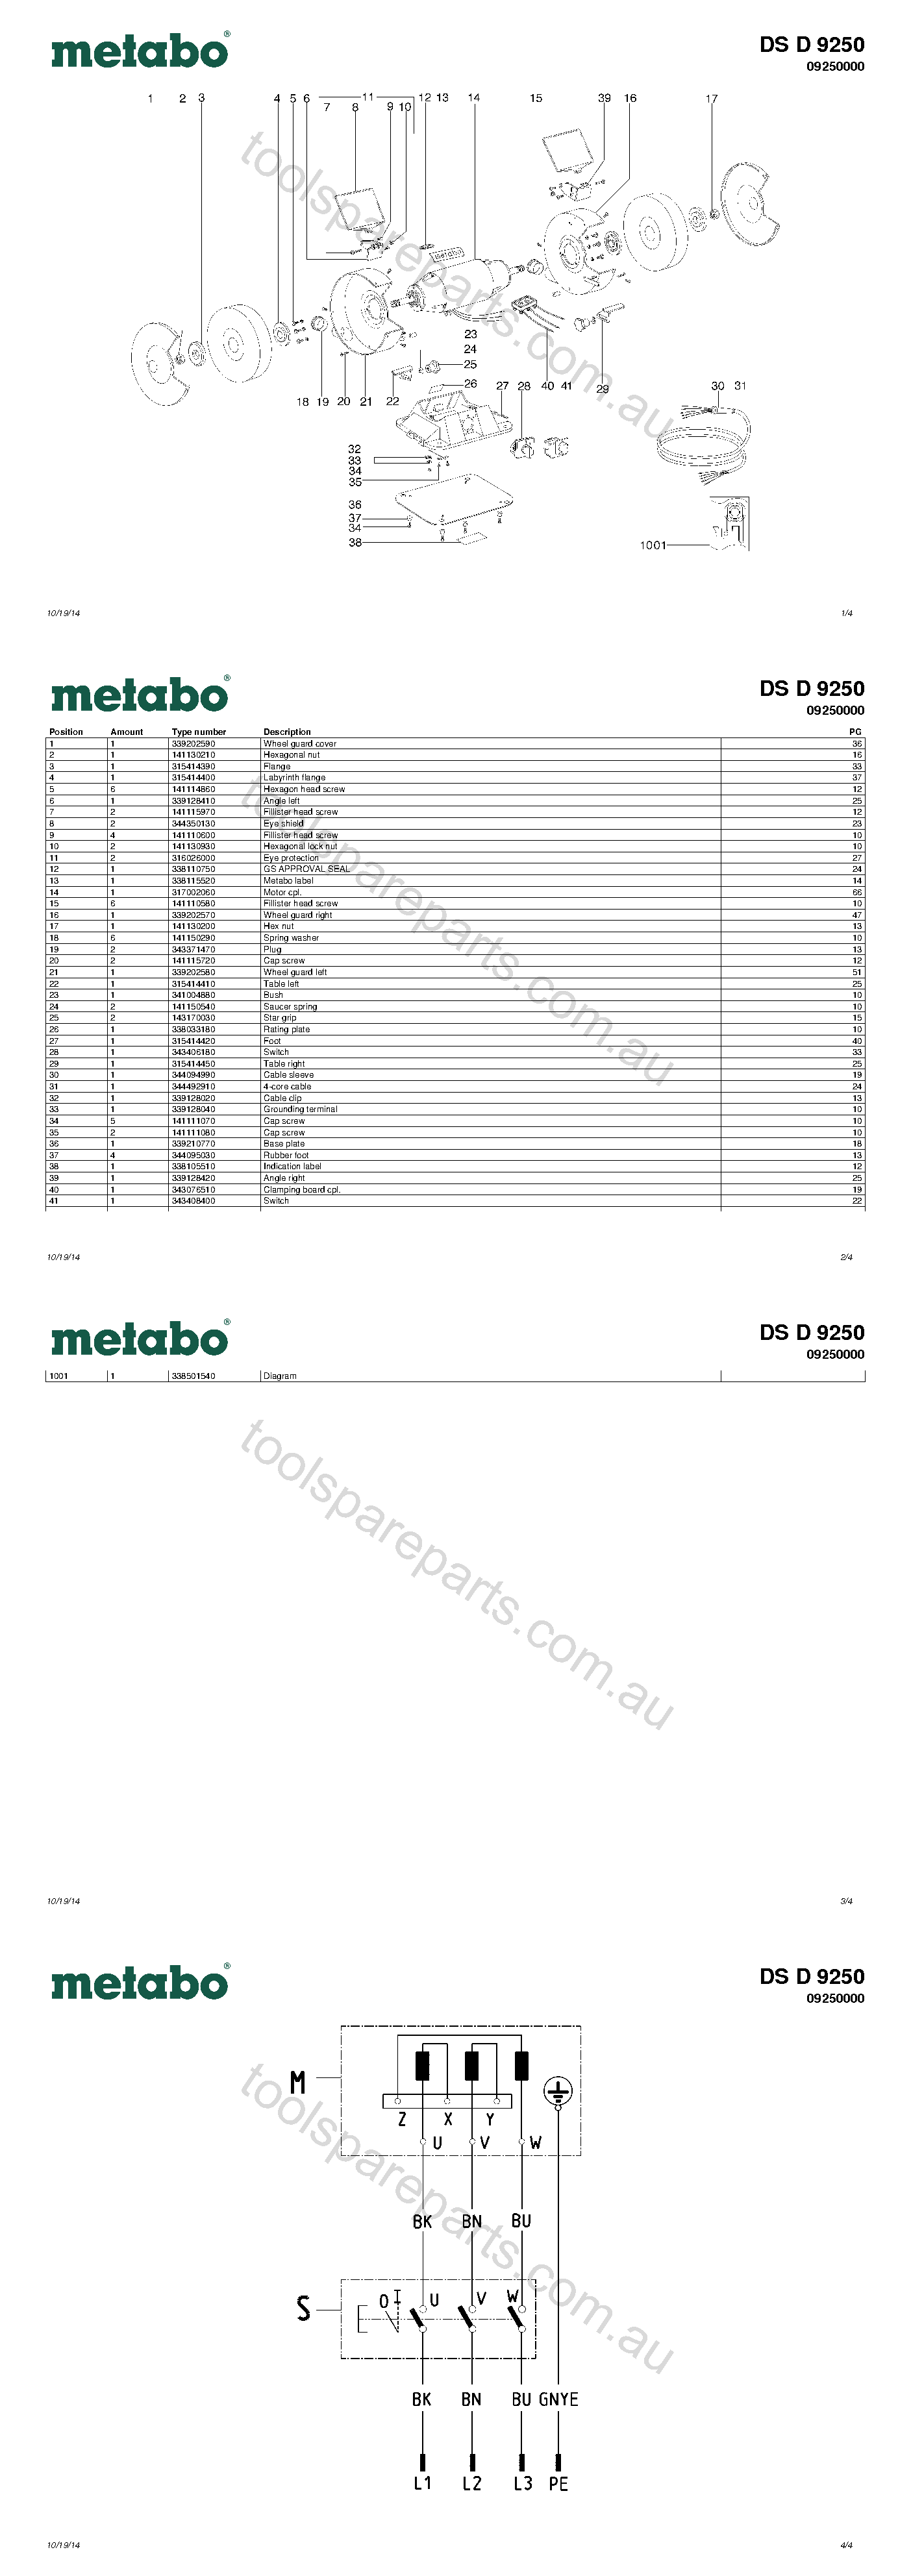 Metabo DS D 9250 09250000  Diagram 1